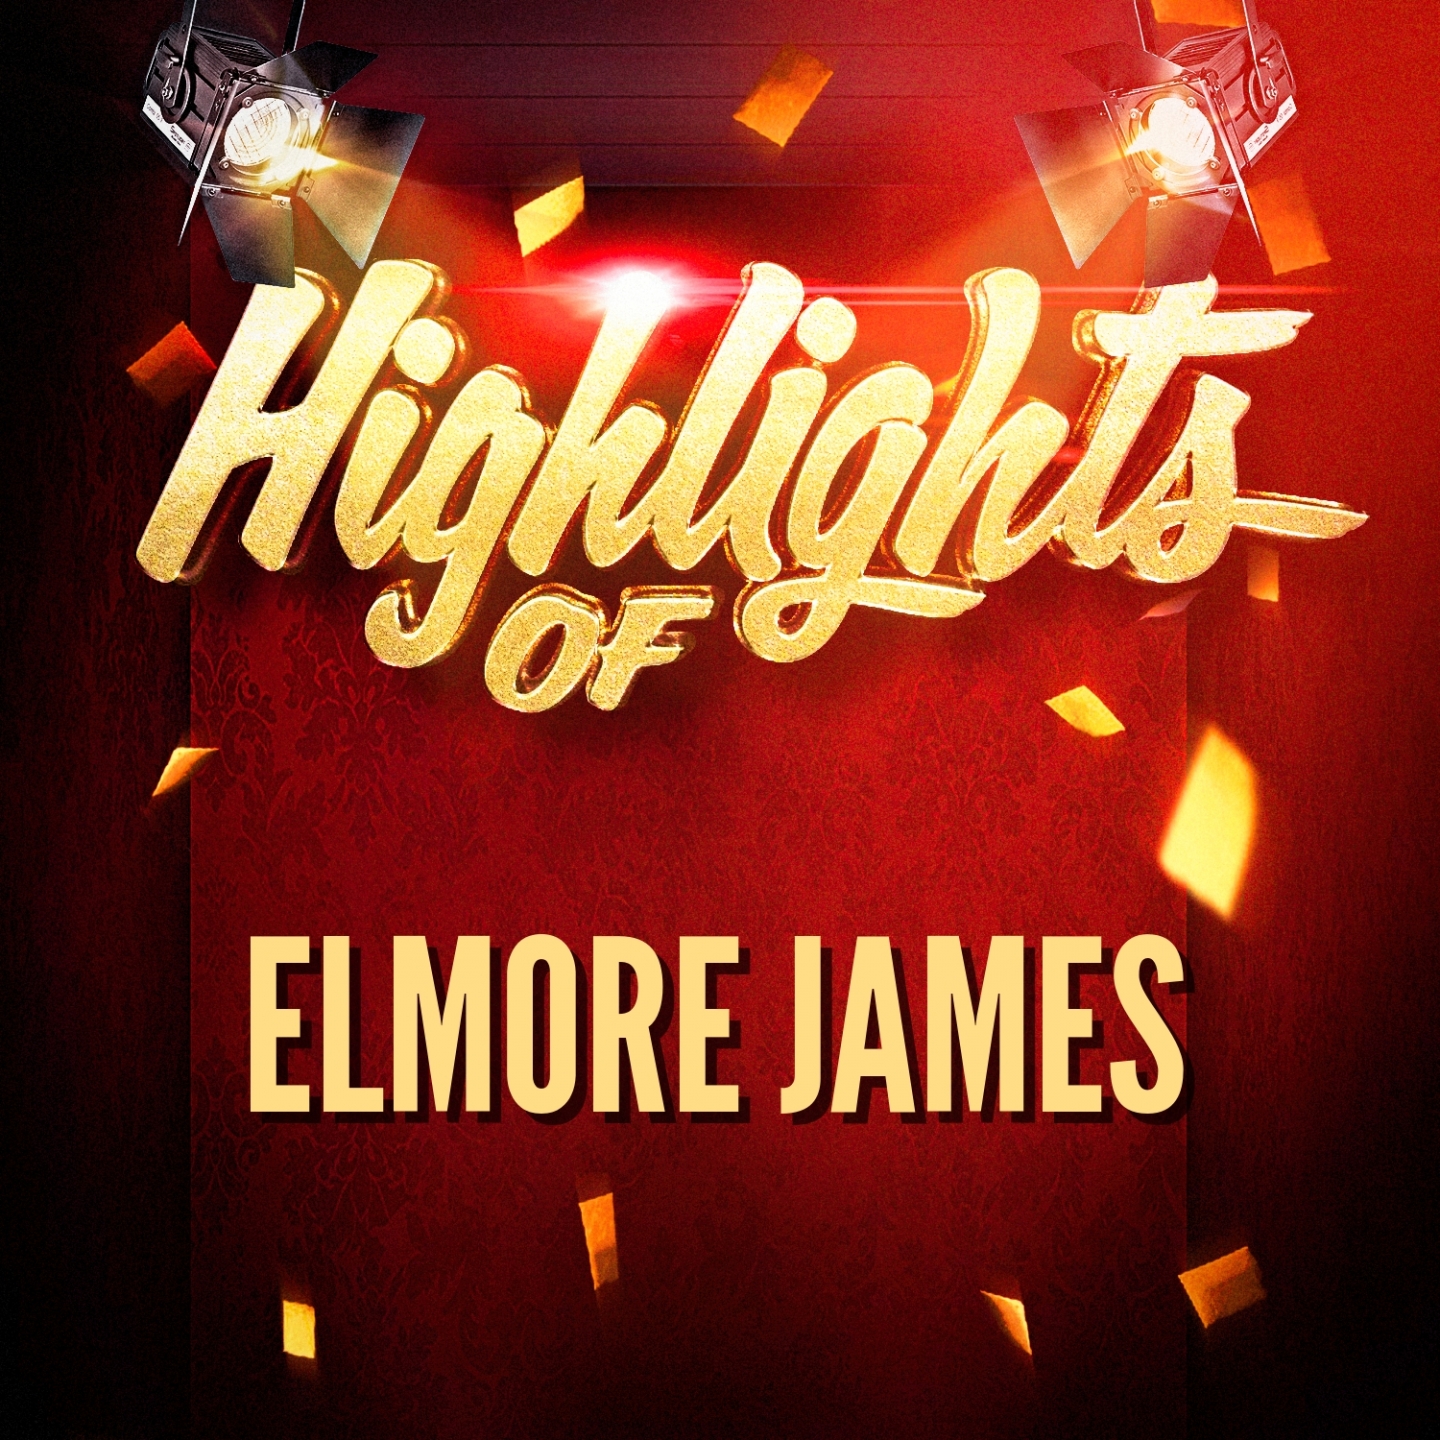 Highlights of Elmore James